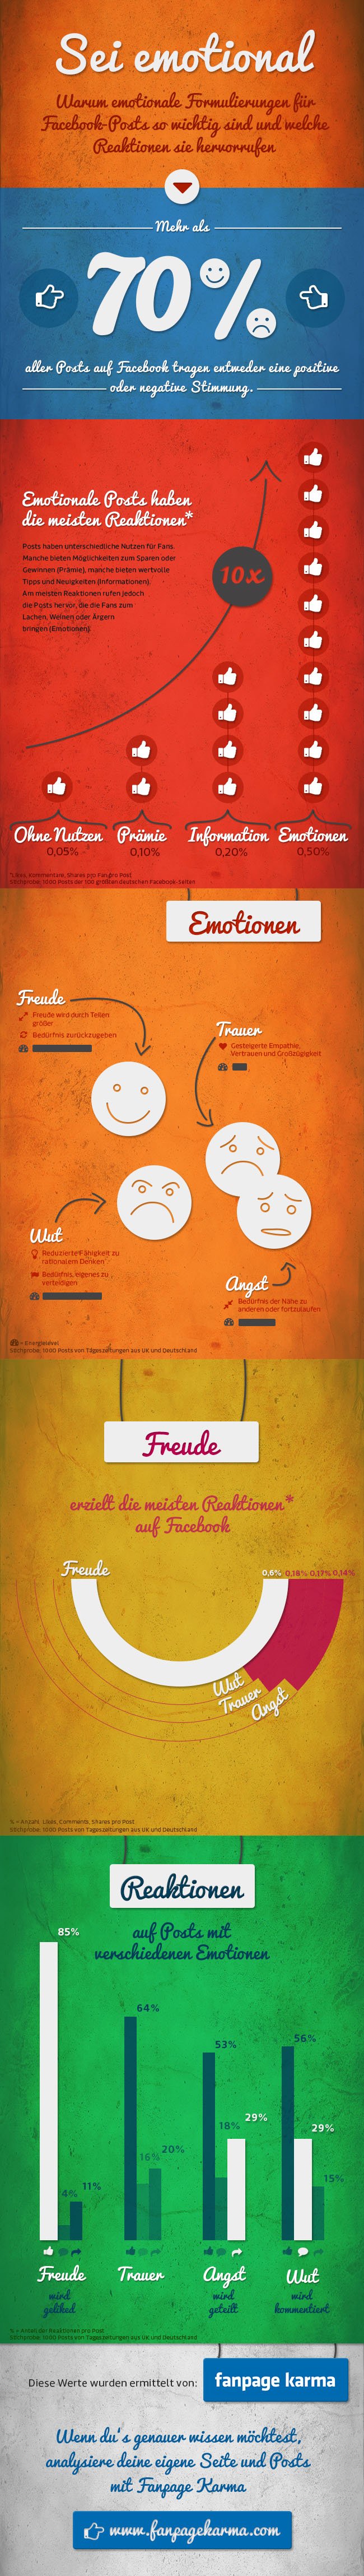 Infografik "Sei emotional" von Fanpagekarma.org